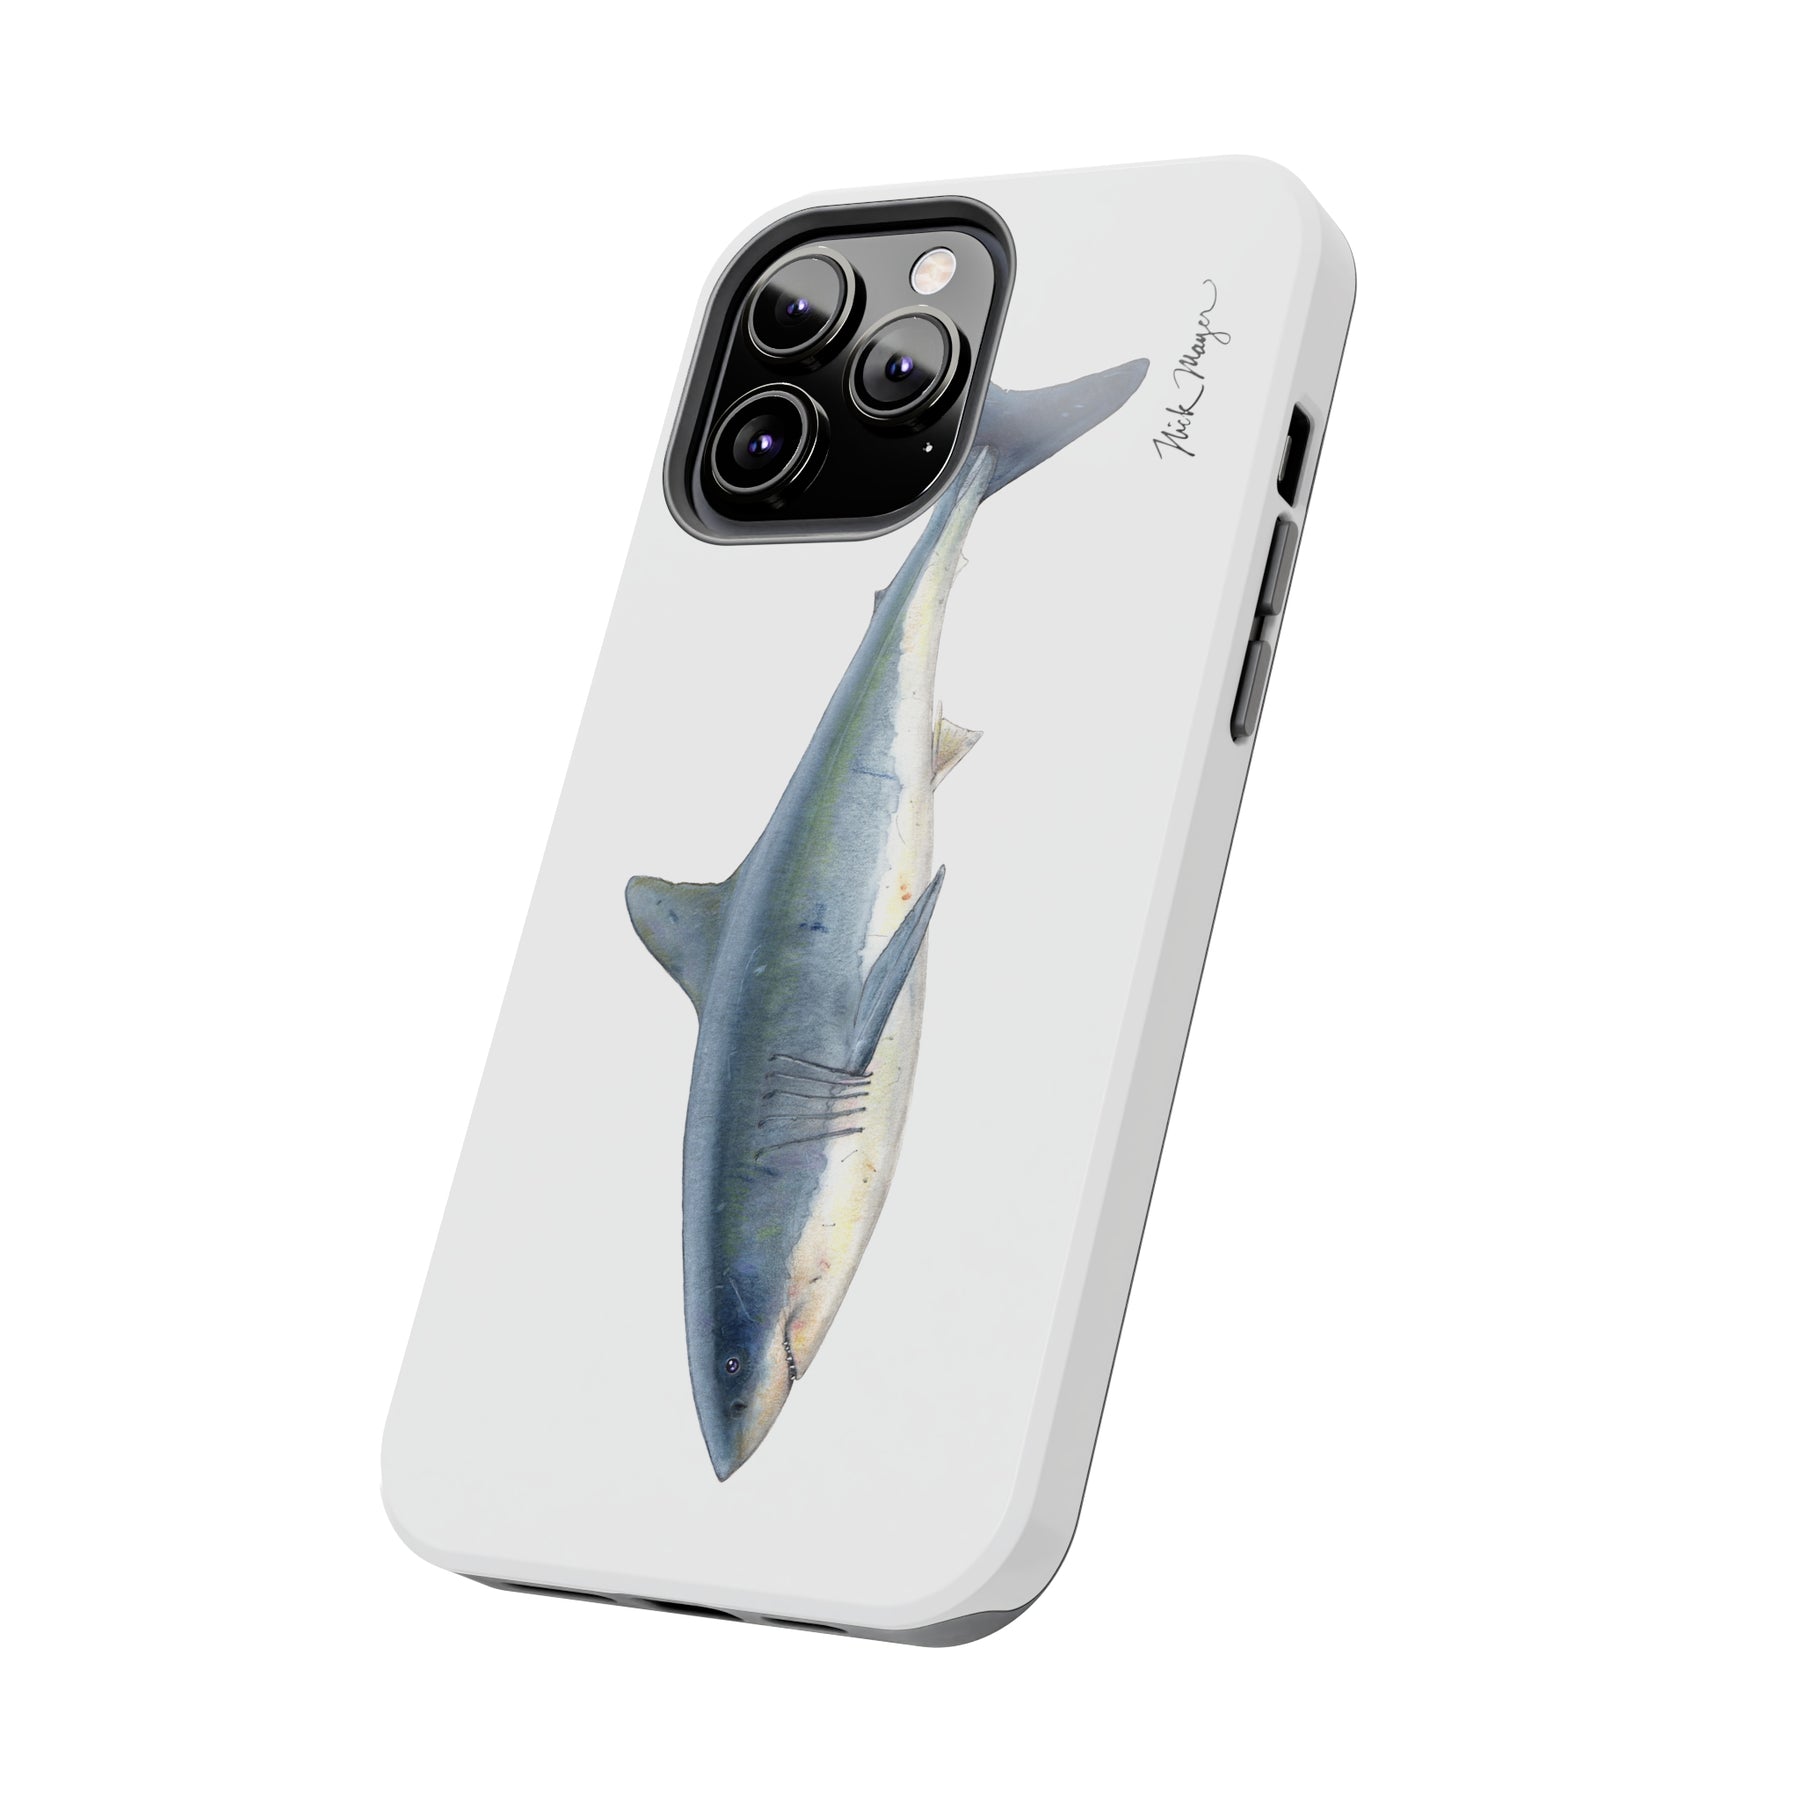 Great White Shark Phone Case (iPhone)